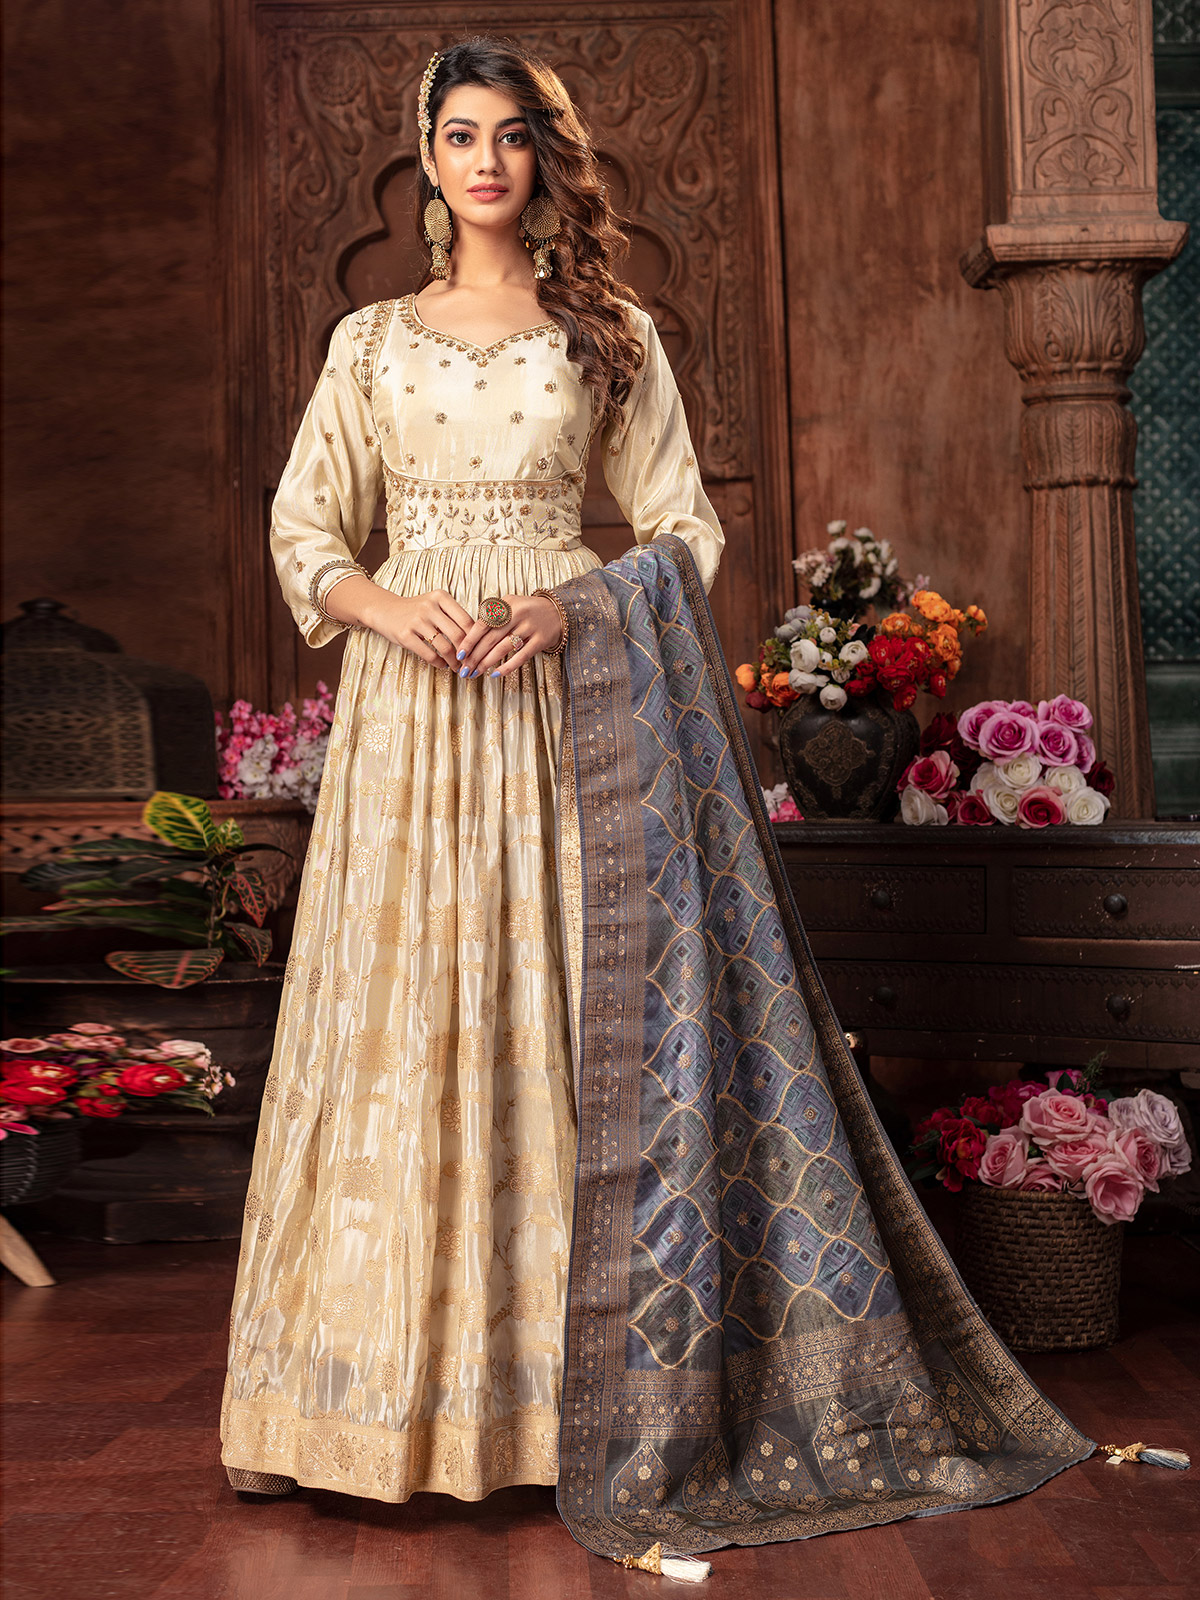 Ethnic Anarkali Suit Designs To Look Elegant